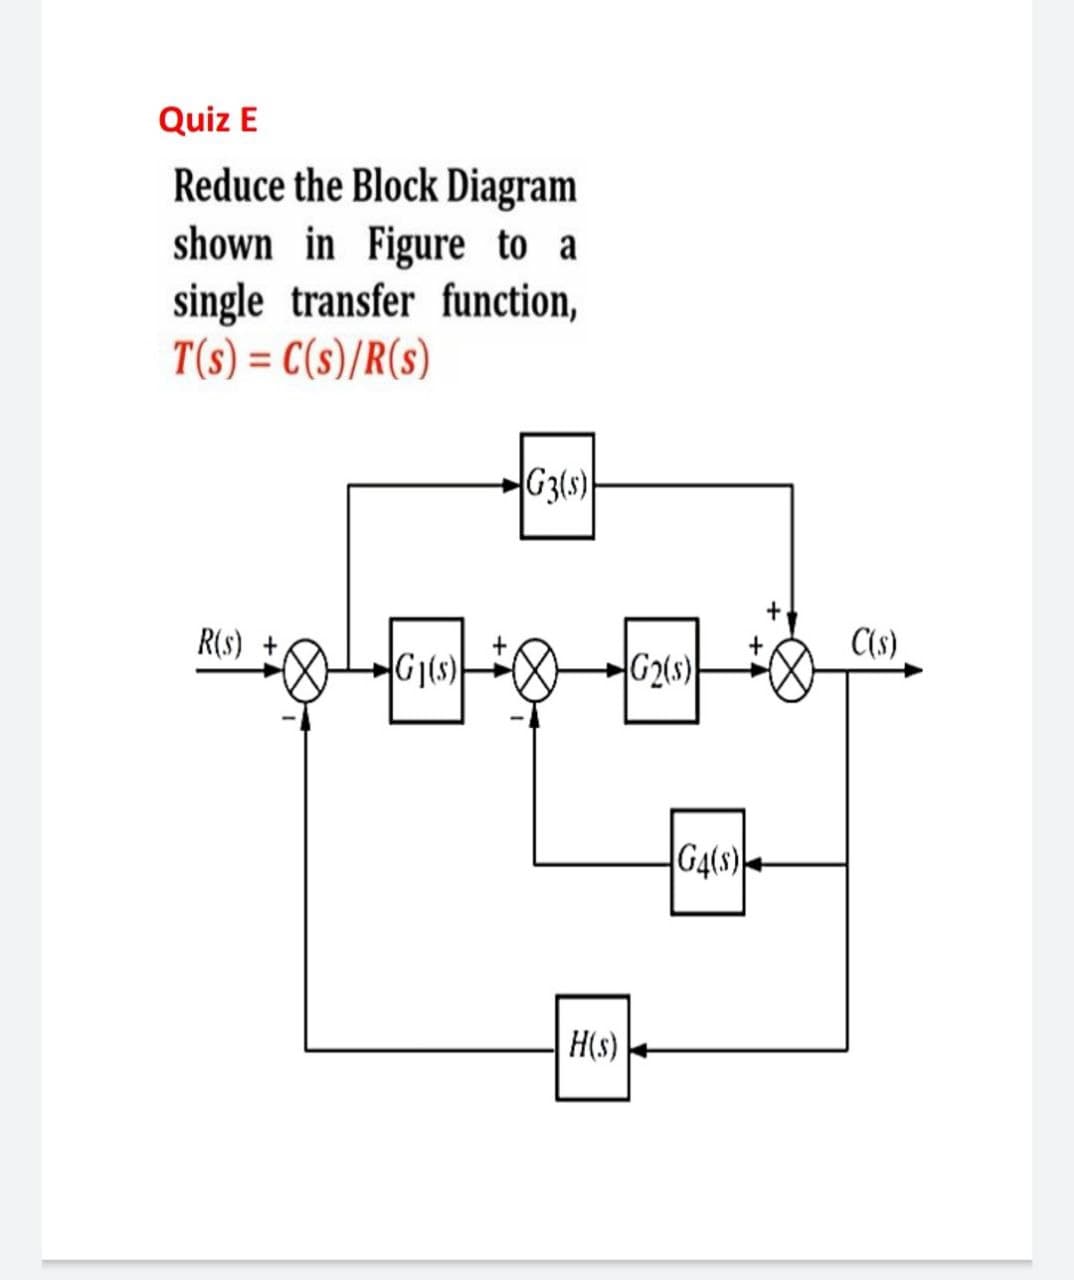 Quiz E
Reduce the Block Diagram
shown in Figure to a
single transfer function,
T(s) = C(s)/R(s)
G3(s)
R(s)
C(s)
G1ts)
G2ts)
G4(s)
H(s)
